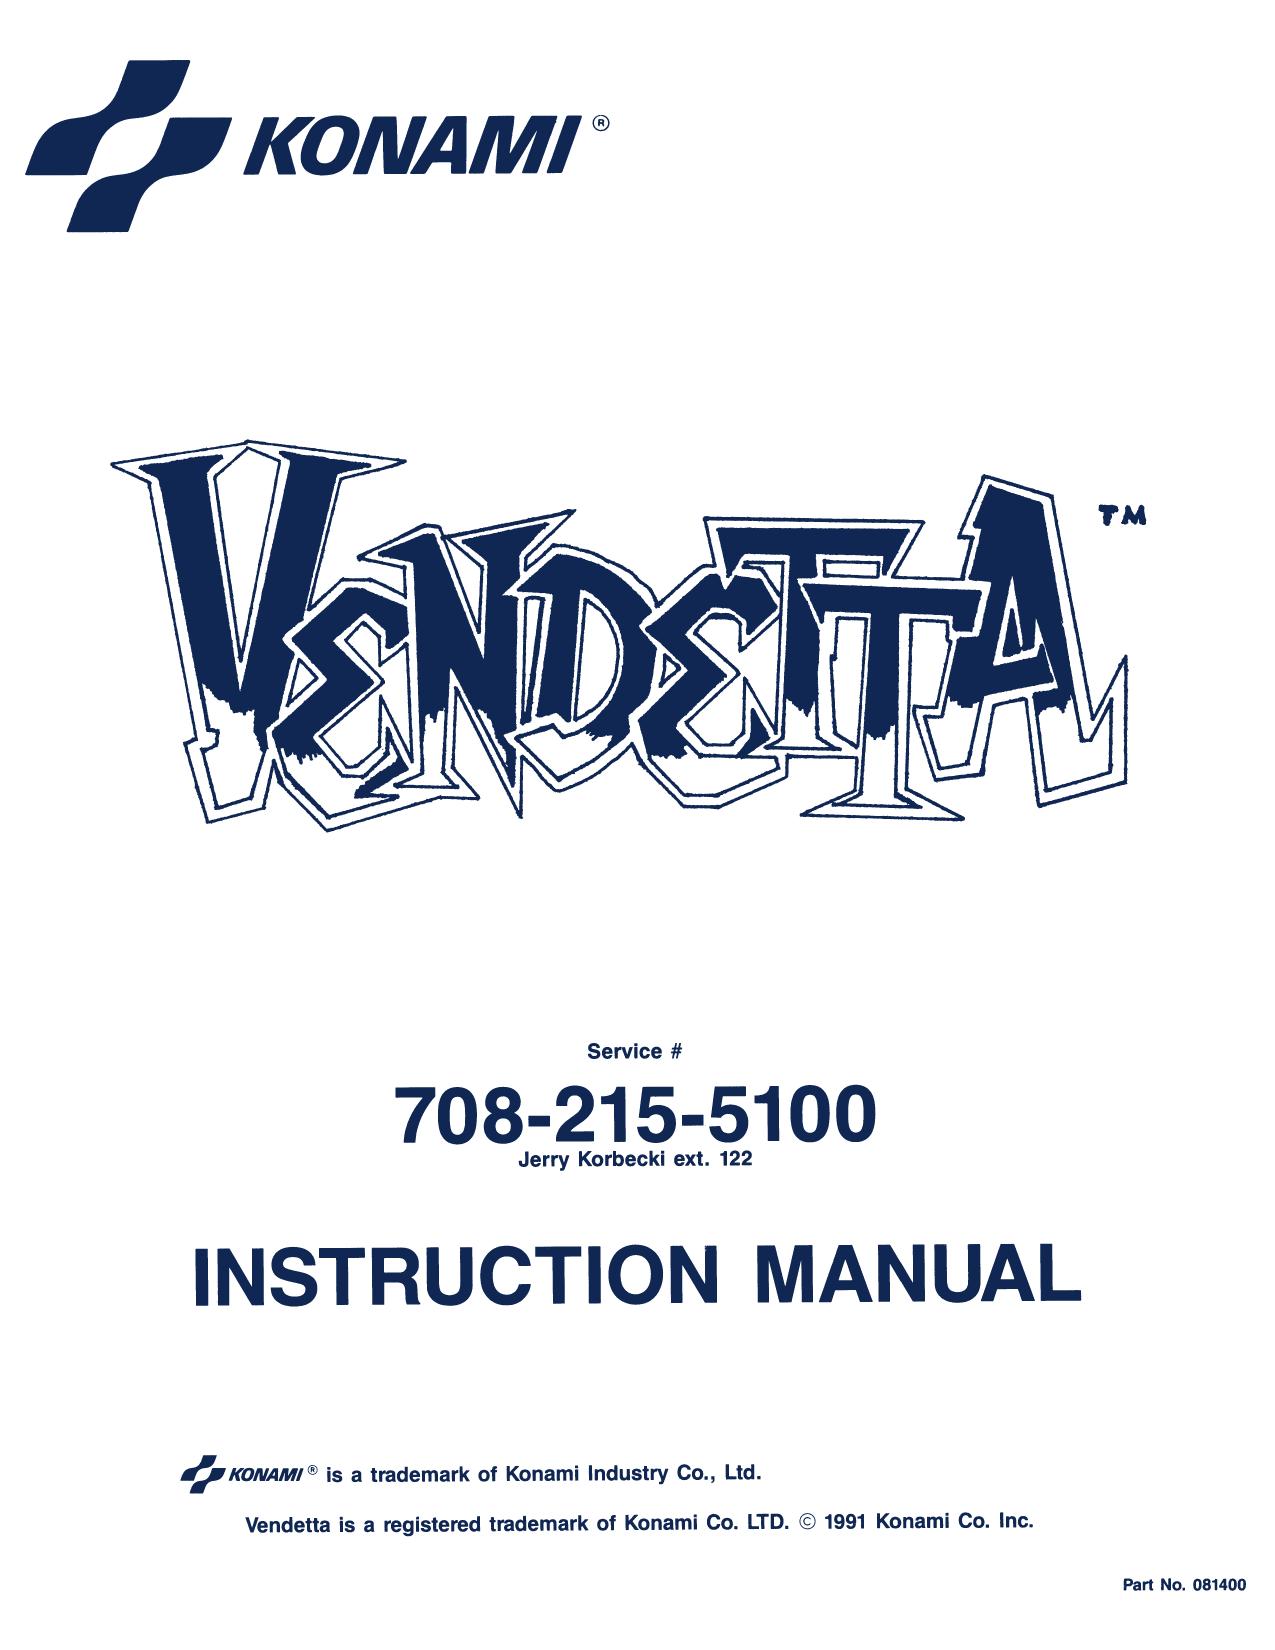 Konami Vendetta Manual